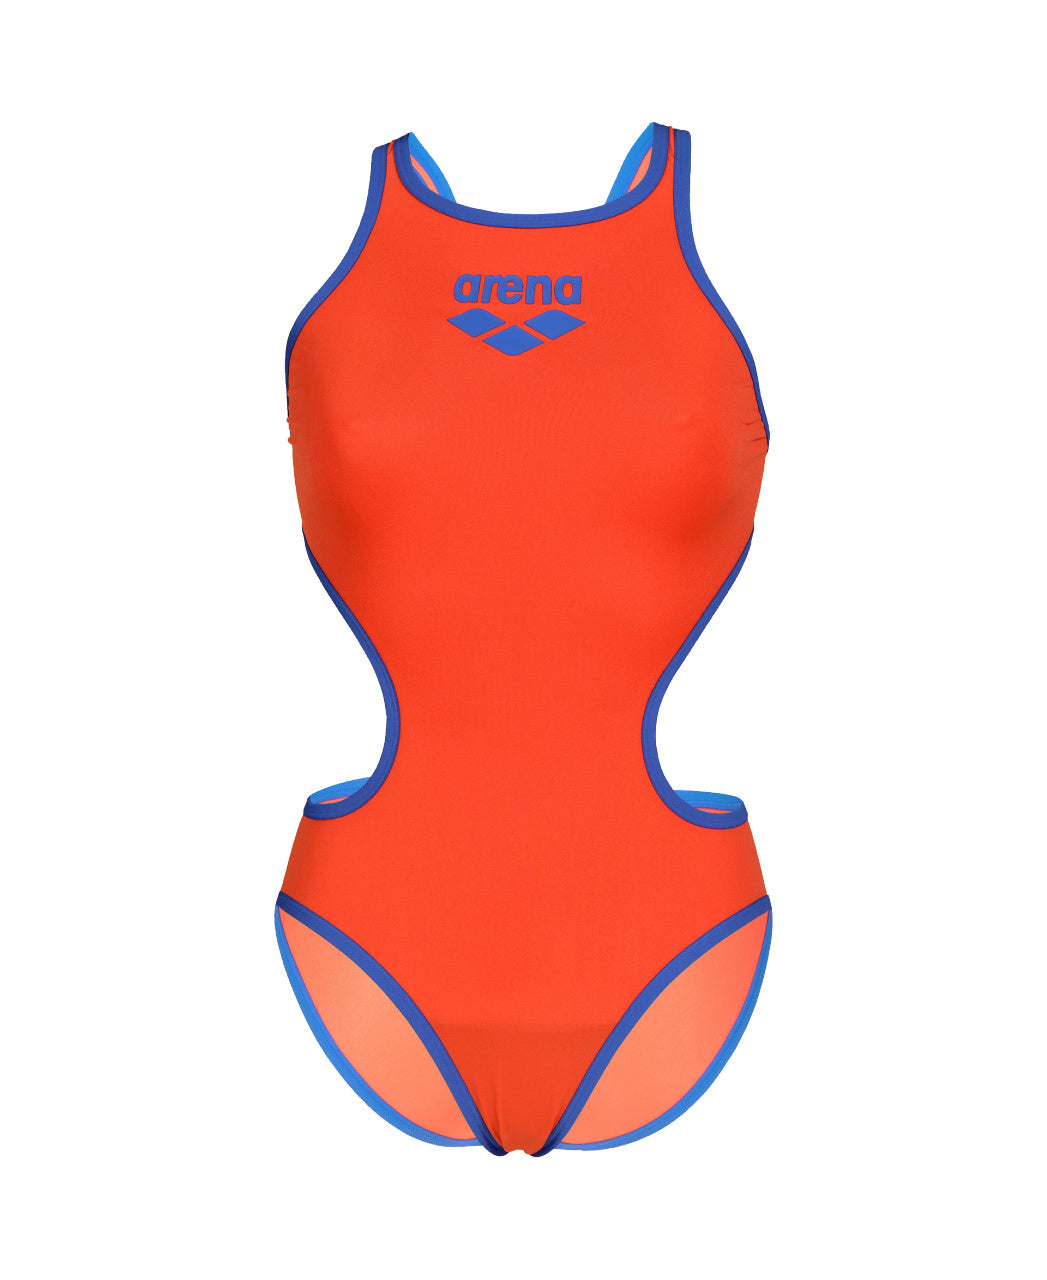 French Arena Women 1 Piece Swimsuit Bathing Suit Swimwear Black & Eye  Catcher Geometric Design Made in France New M 